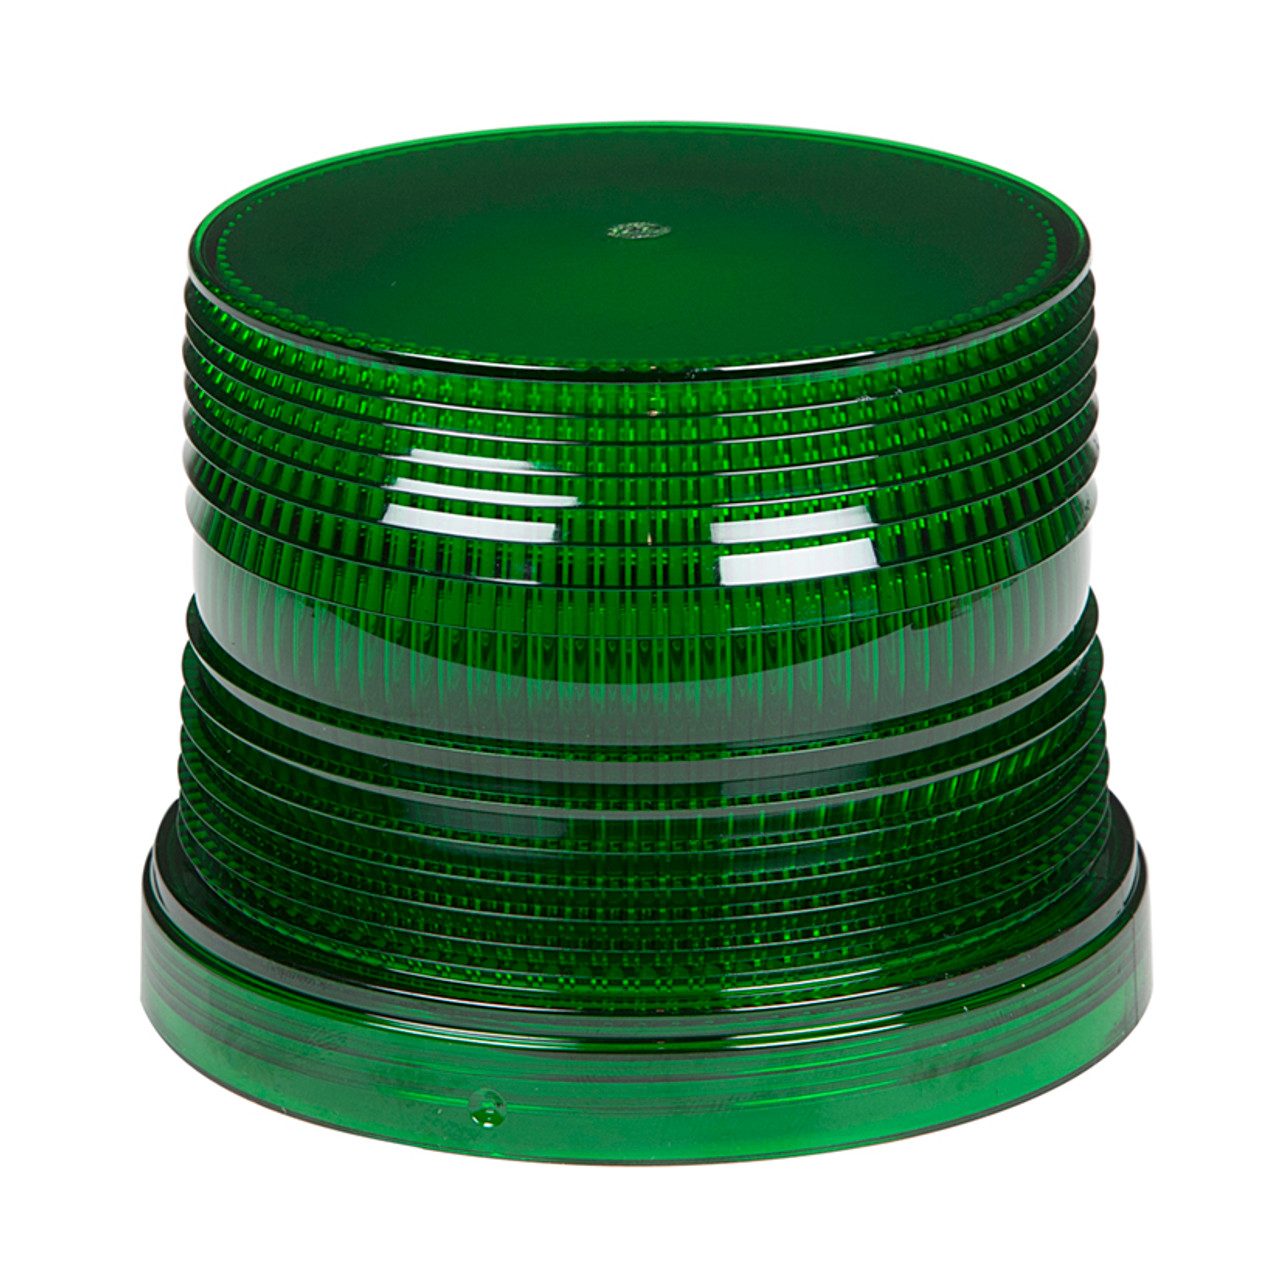 Beacon Replacement Lens - Green  98284